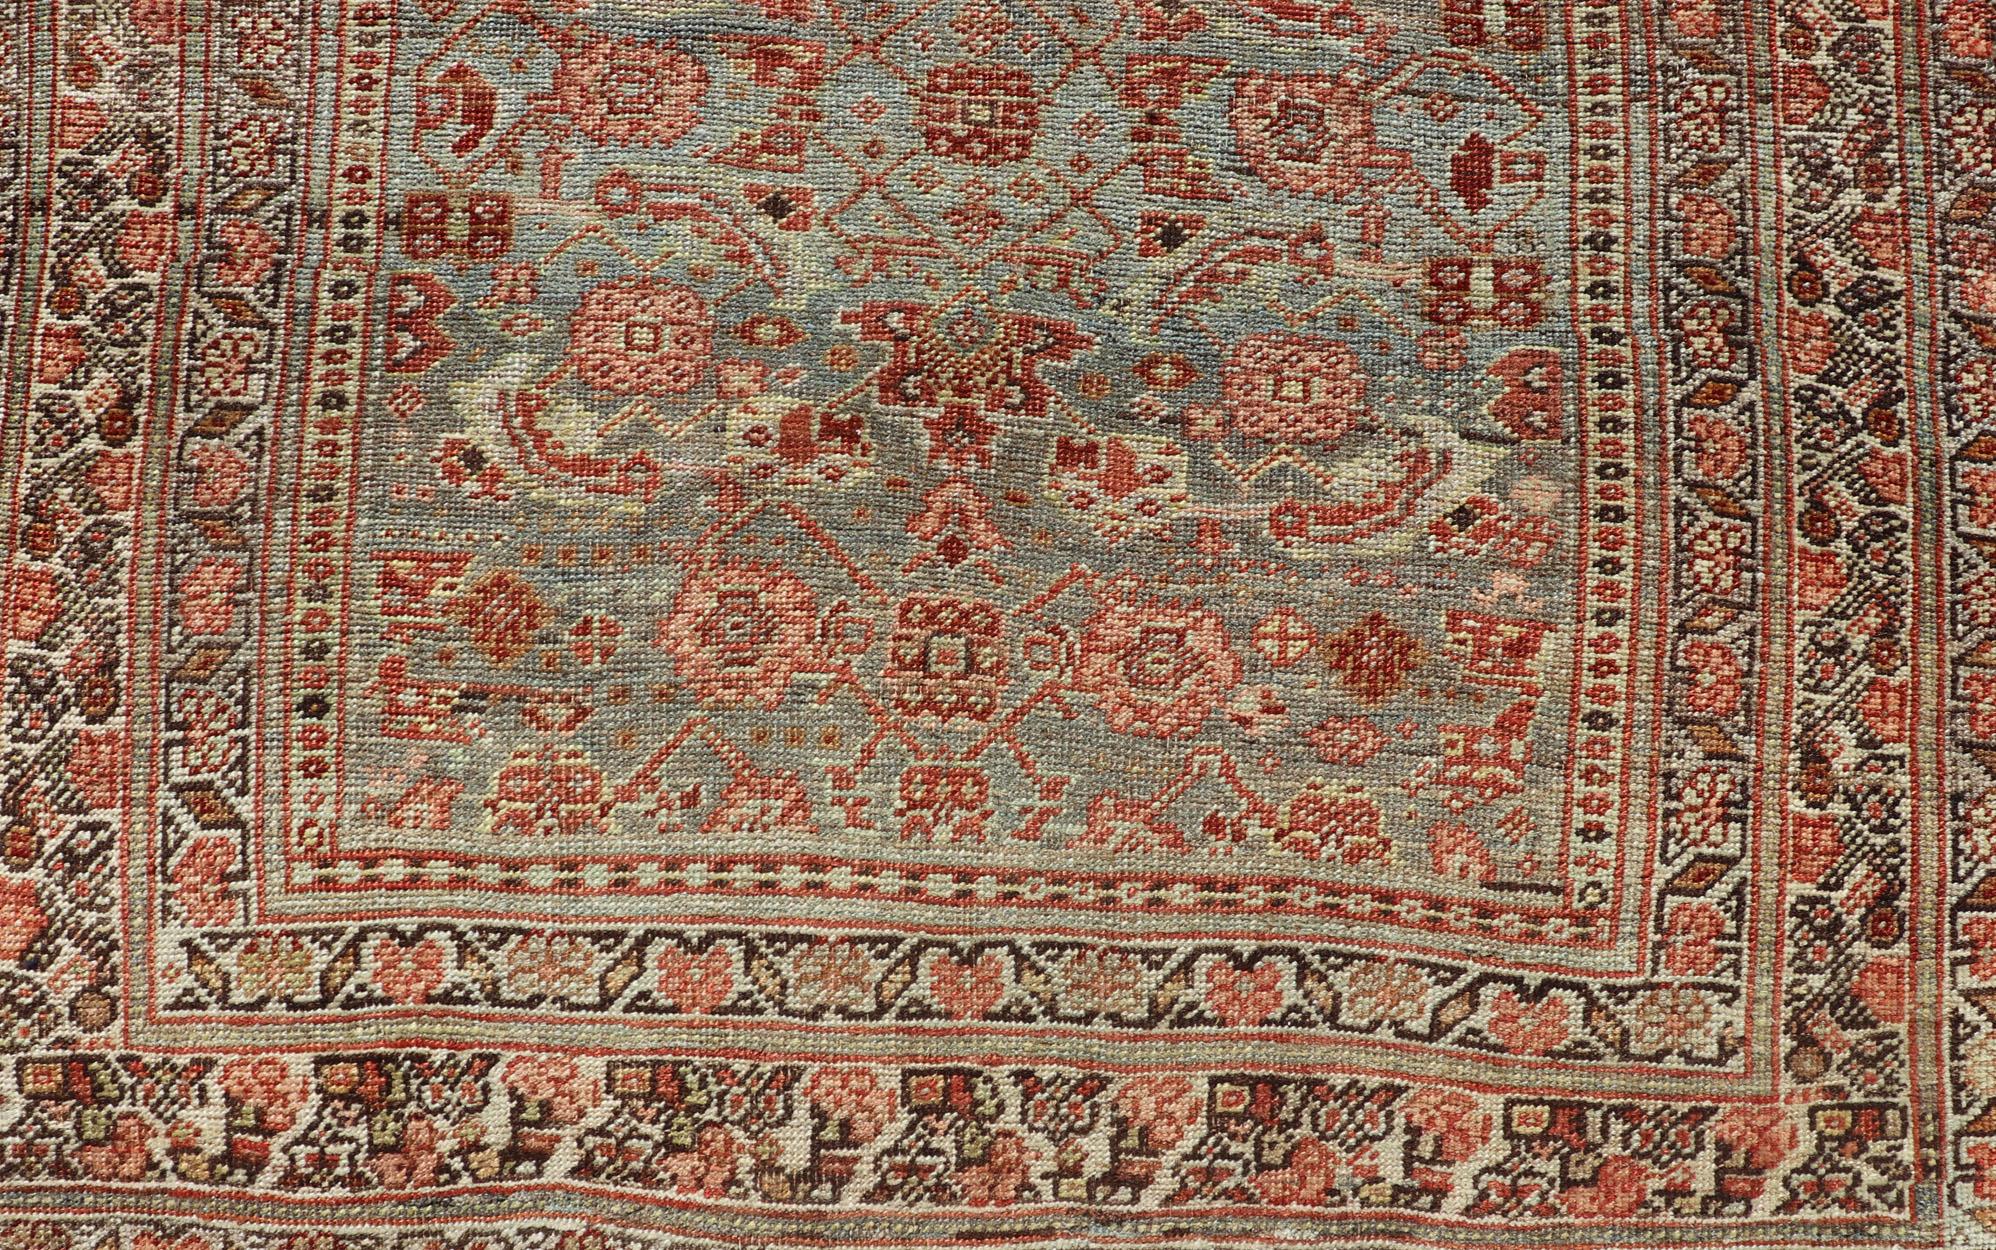 Antique Persian Bidjar Runner, rug EMB-9575-P13088, country of origin / type: Persian / Bidjar, circa Early-20th Century.

Measures: 3'10'' x 18'0''

This stunning antique Bidjar rug (circa 1900s) features an all-over design featuring Herati